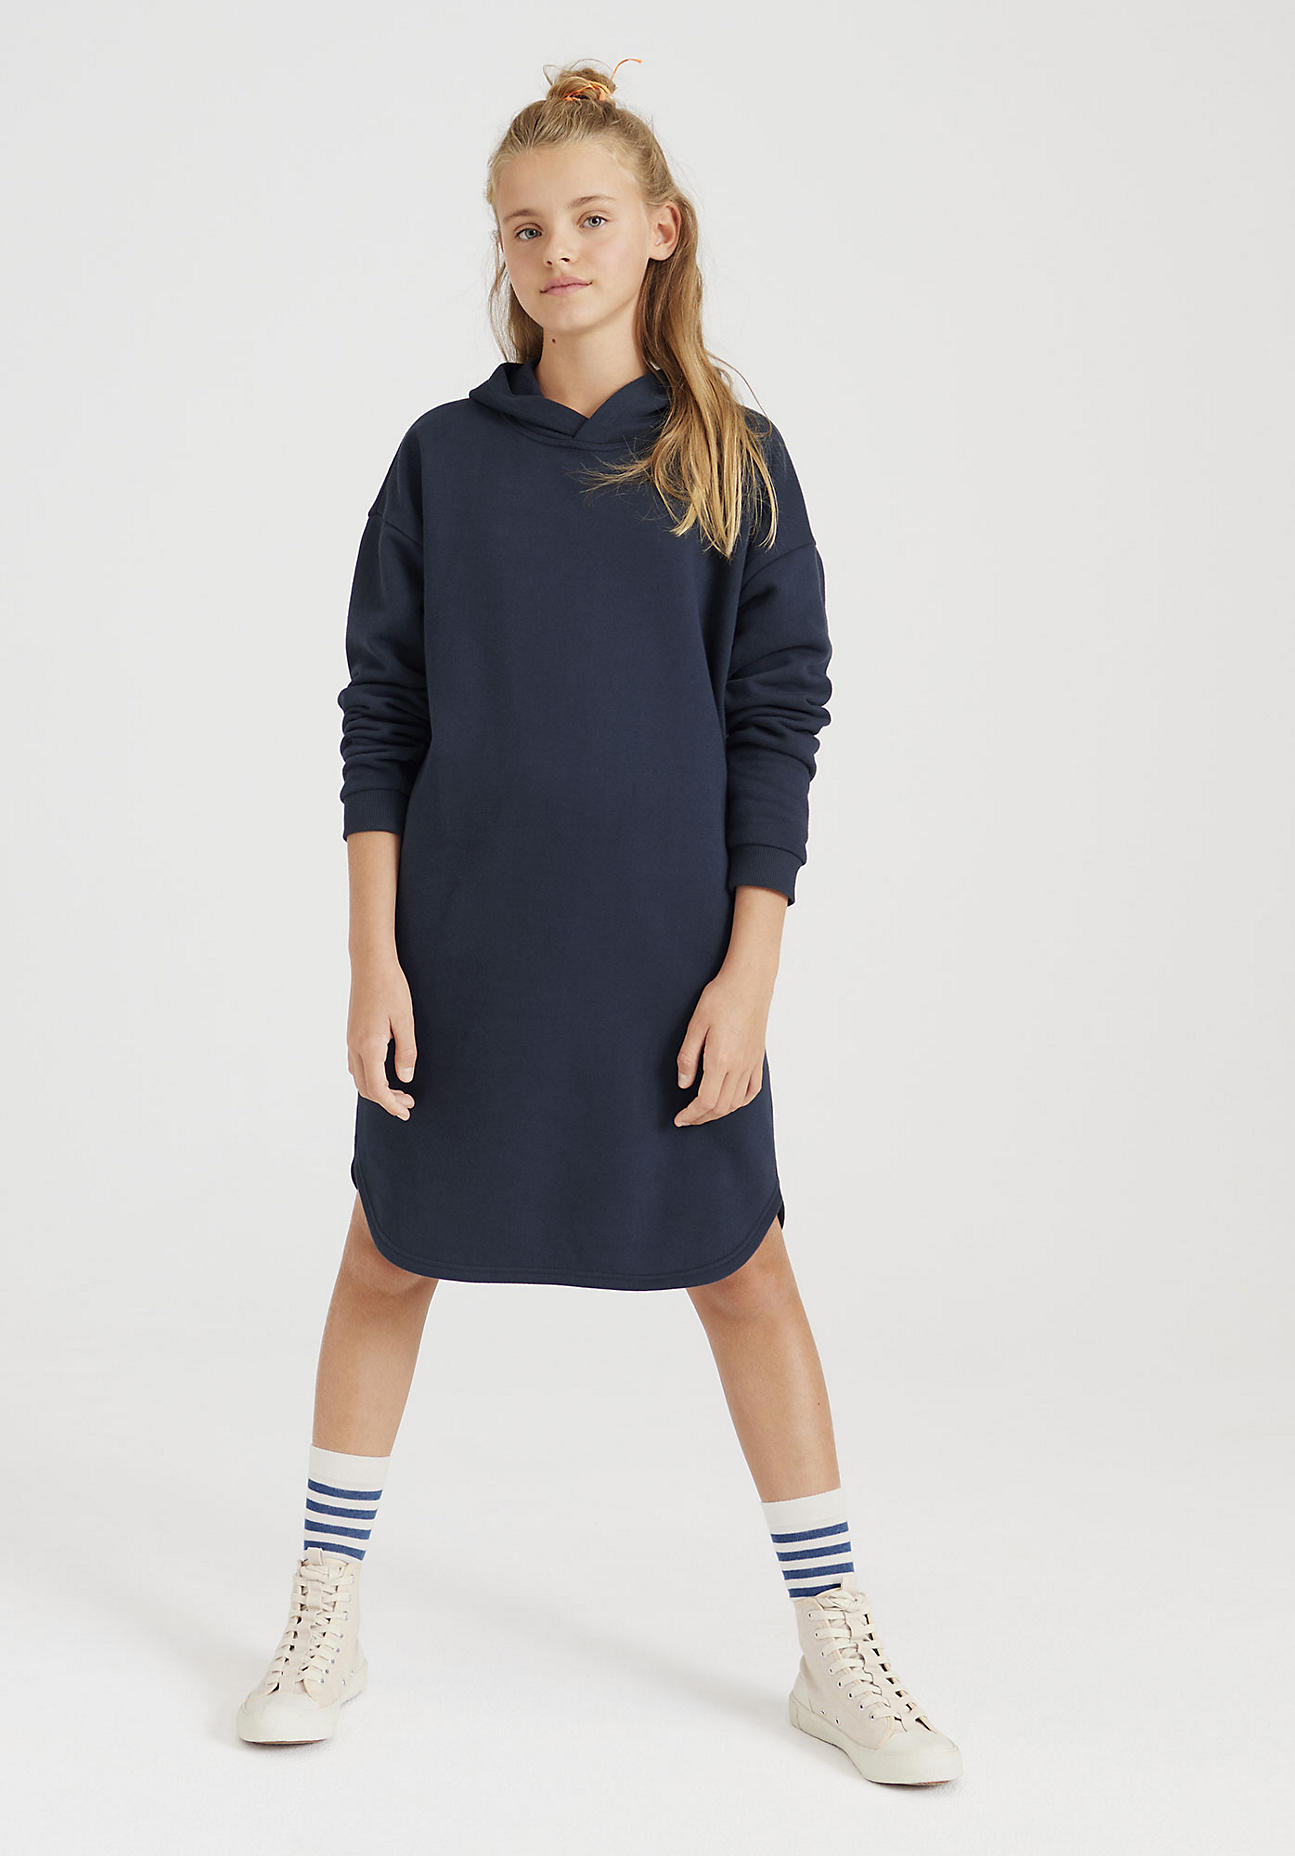 hessnatur Kinder Hoodie-Kleid aus Bio-Baumwolle - blau Größe 134/140